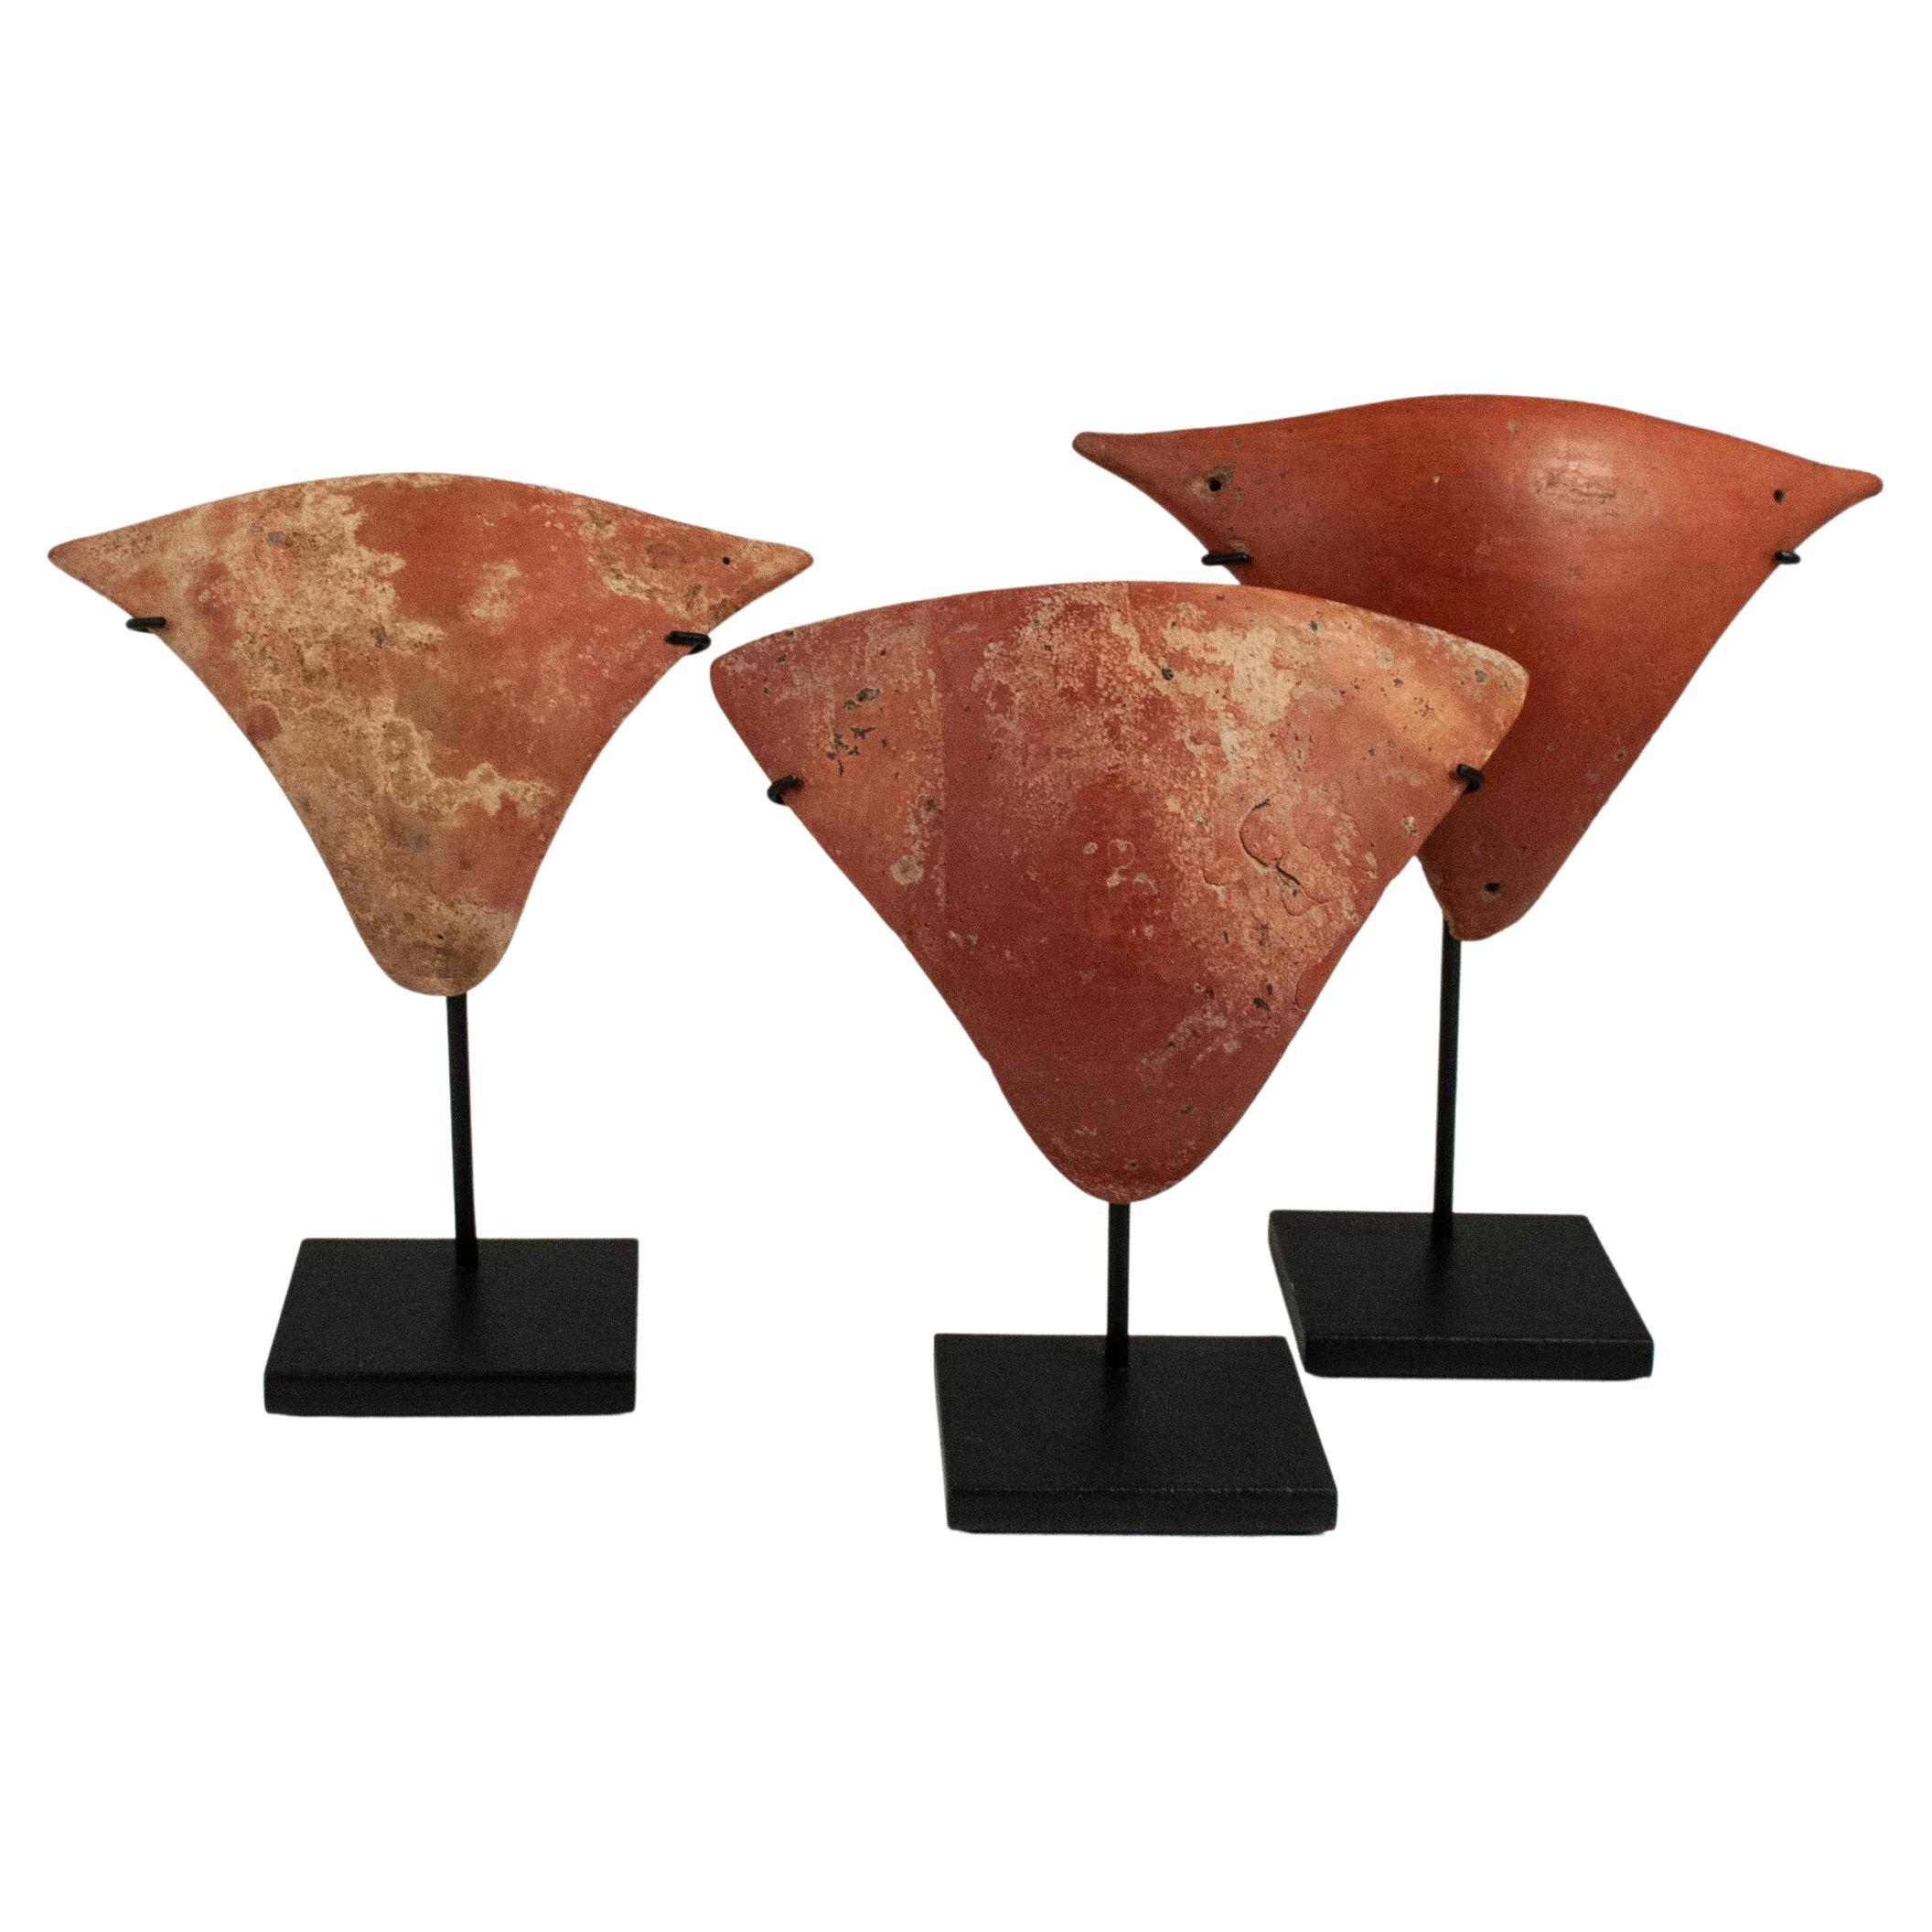 Redware Tangas aus dem 15. Jahrhundert oder früher, Marajoara-Kultur, Marajo-Insel, Brasilien